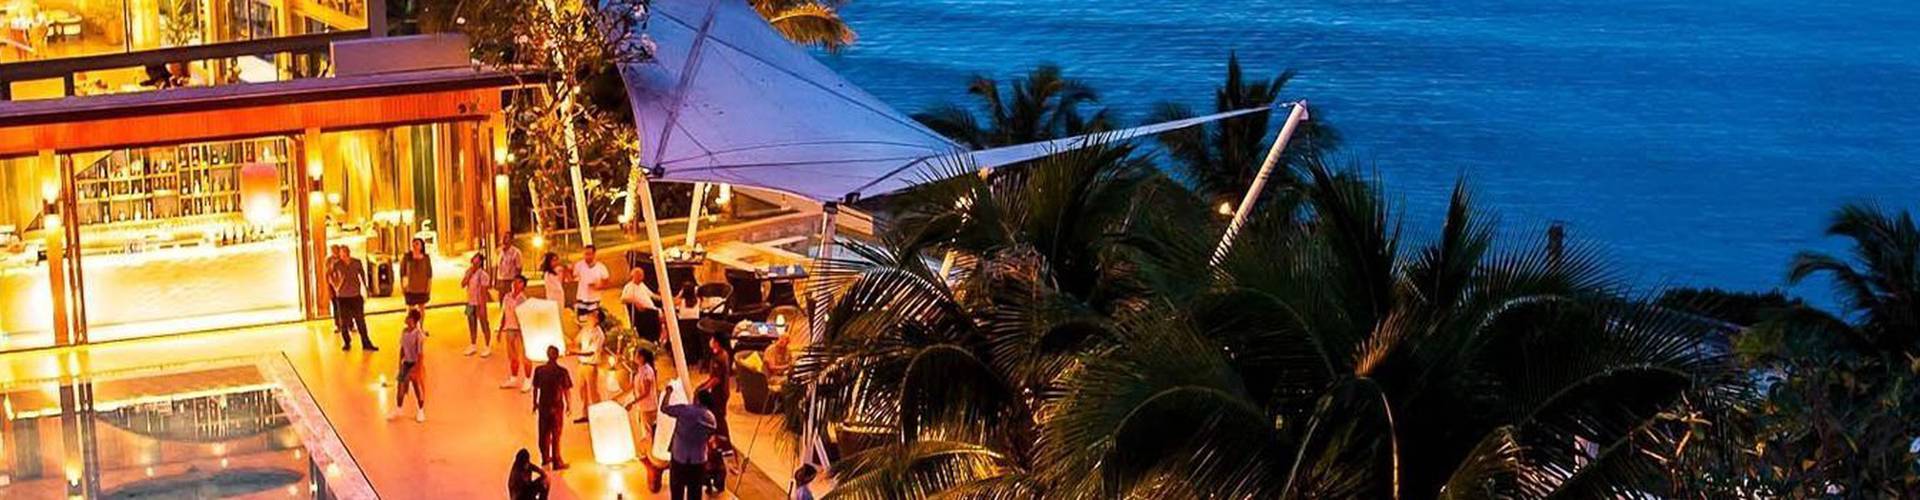 Cape Sienna Phuket Gourmet Hotel & Villas - Phuket - Services